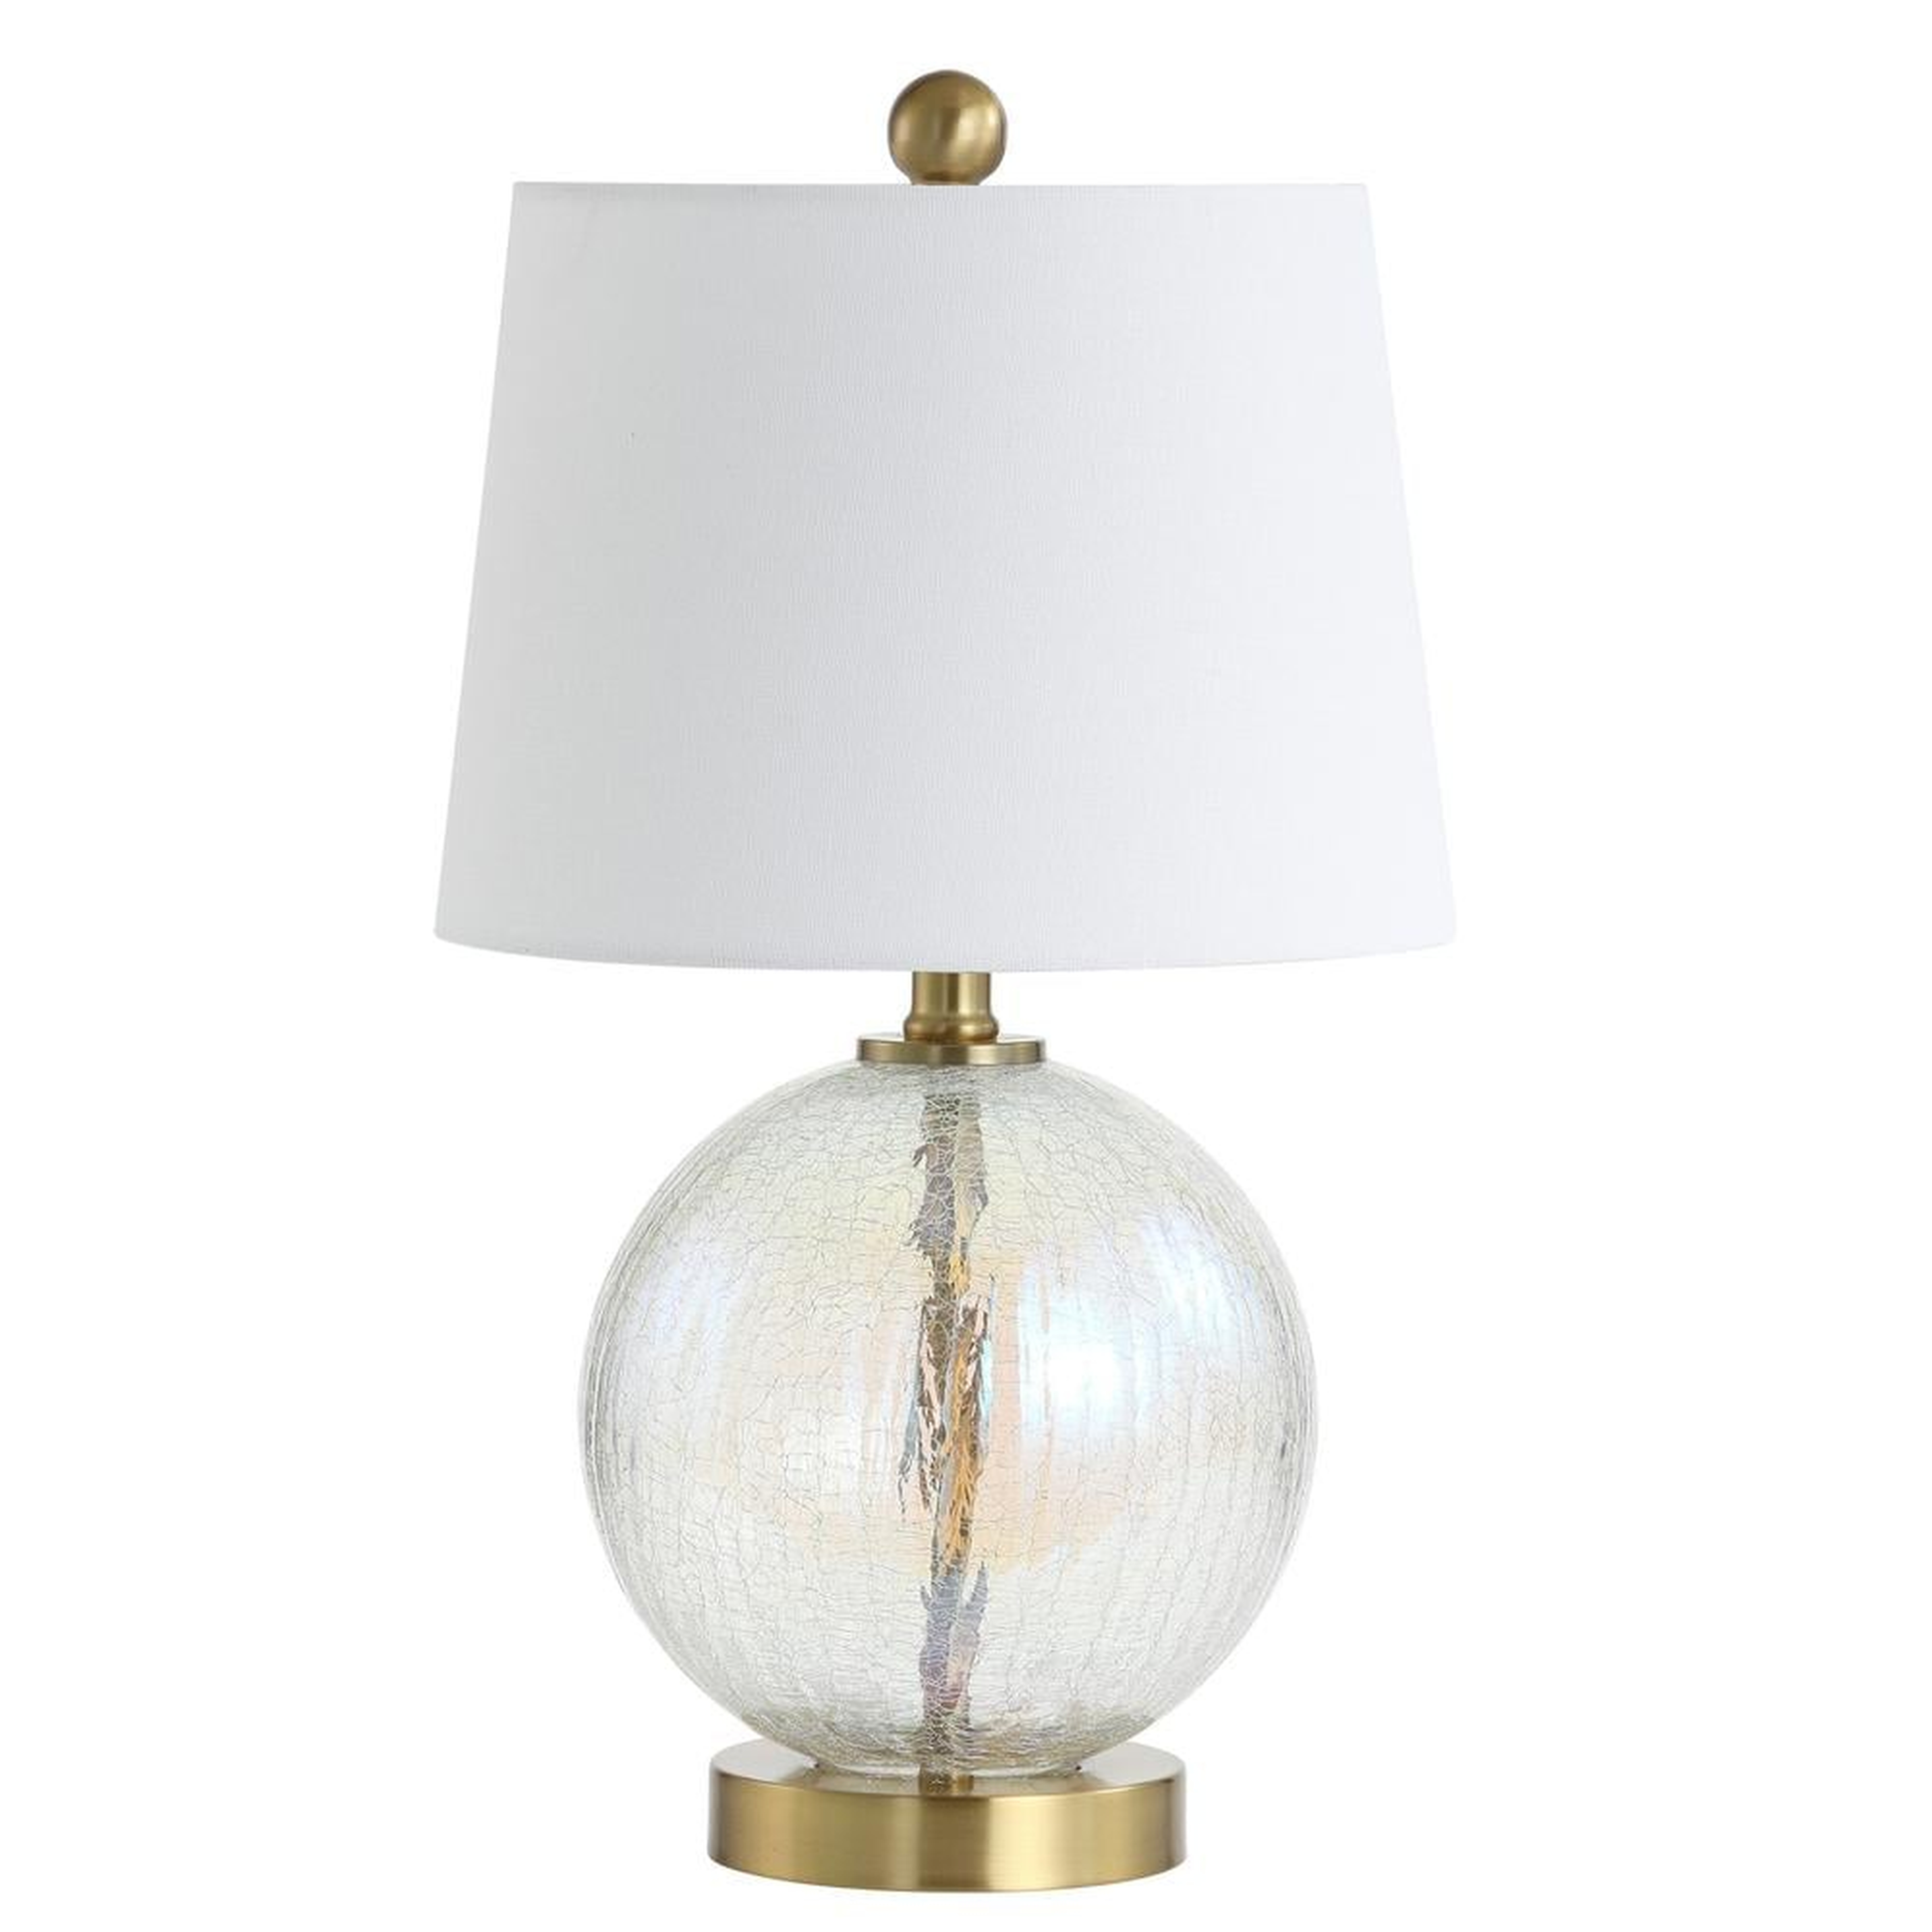 LOVELL GLASS TABLE LAMP - Arlo Home